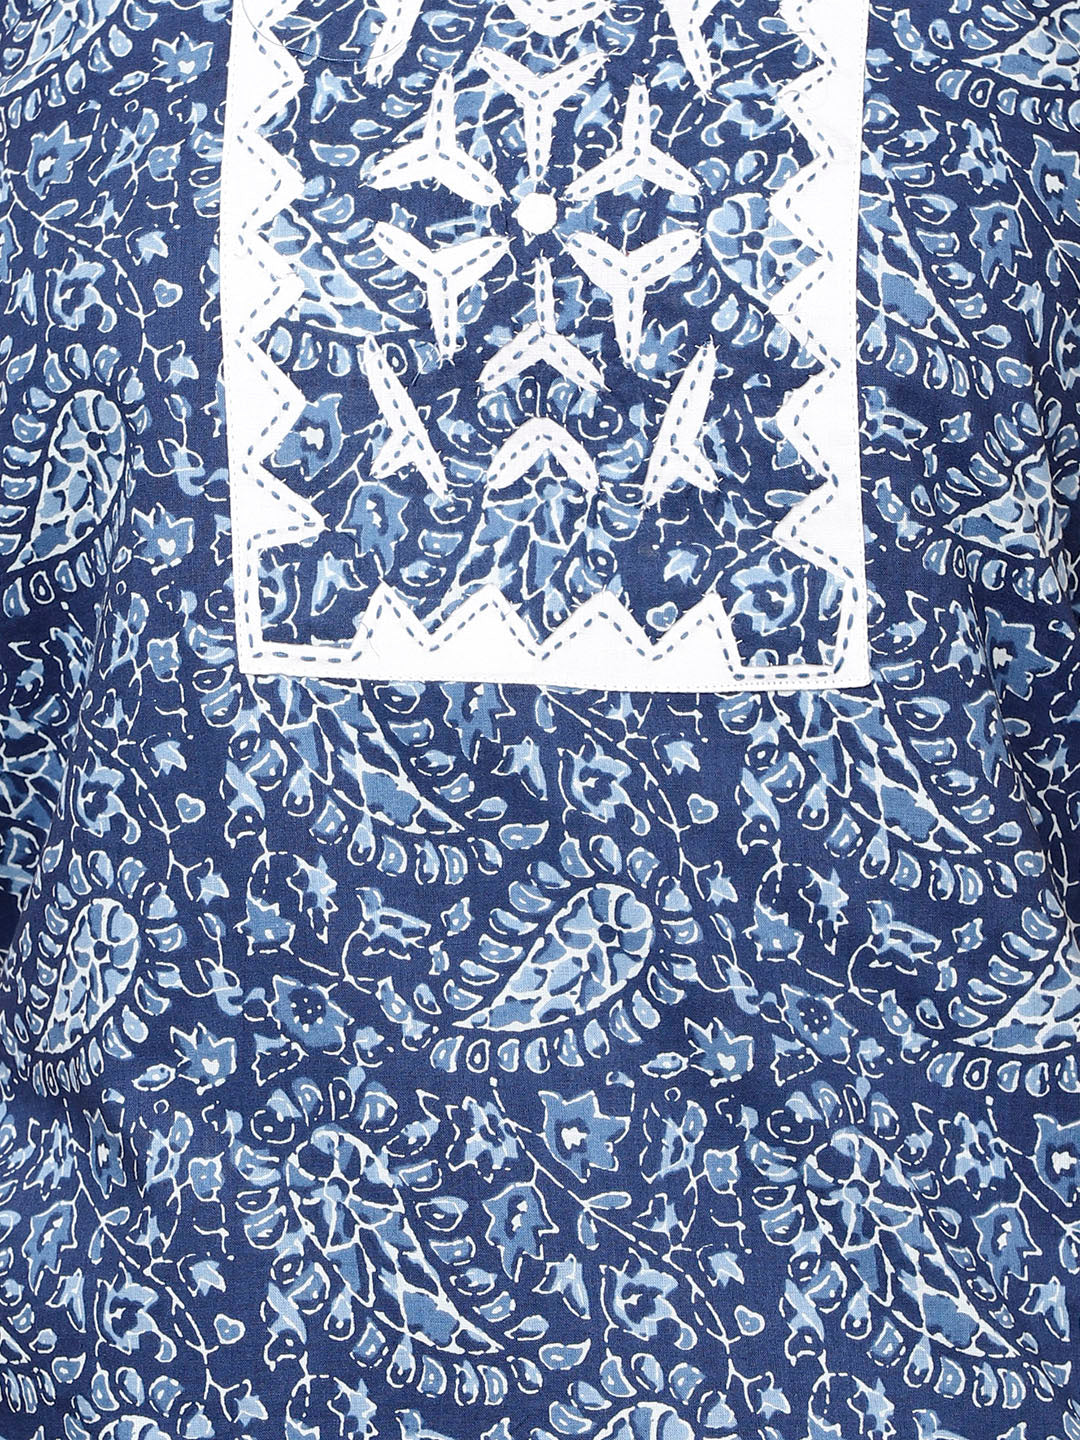 Printed Cotton Unstitched Suit Piece With Chiffon Dupatta